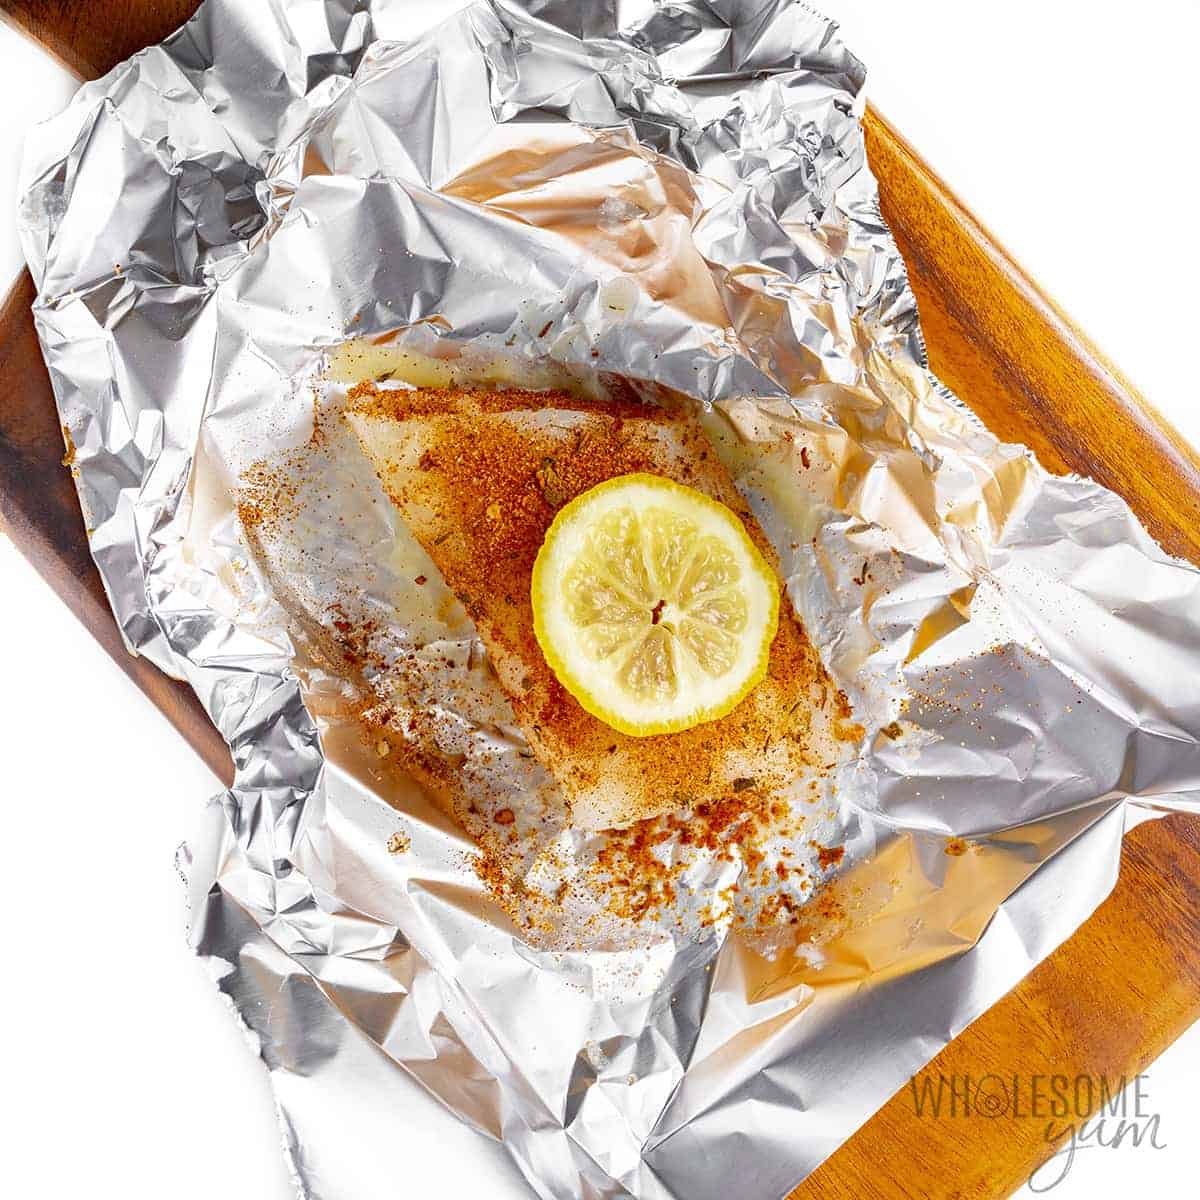 Seasoned raw cod fillet with lemon slice on top.